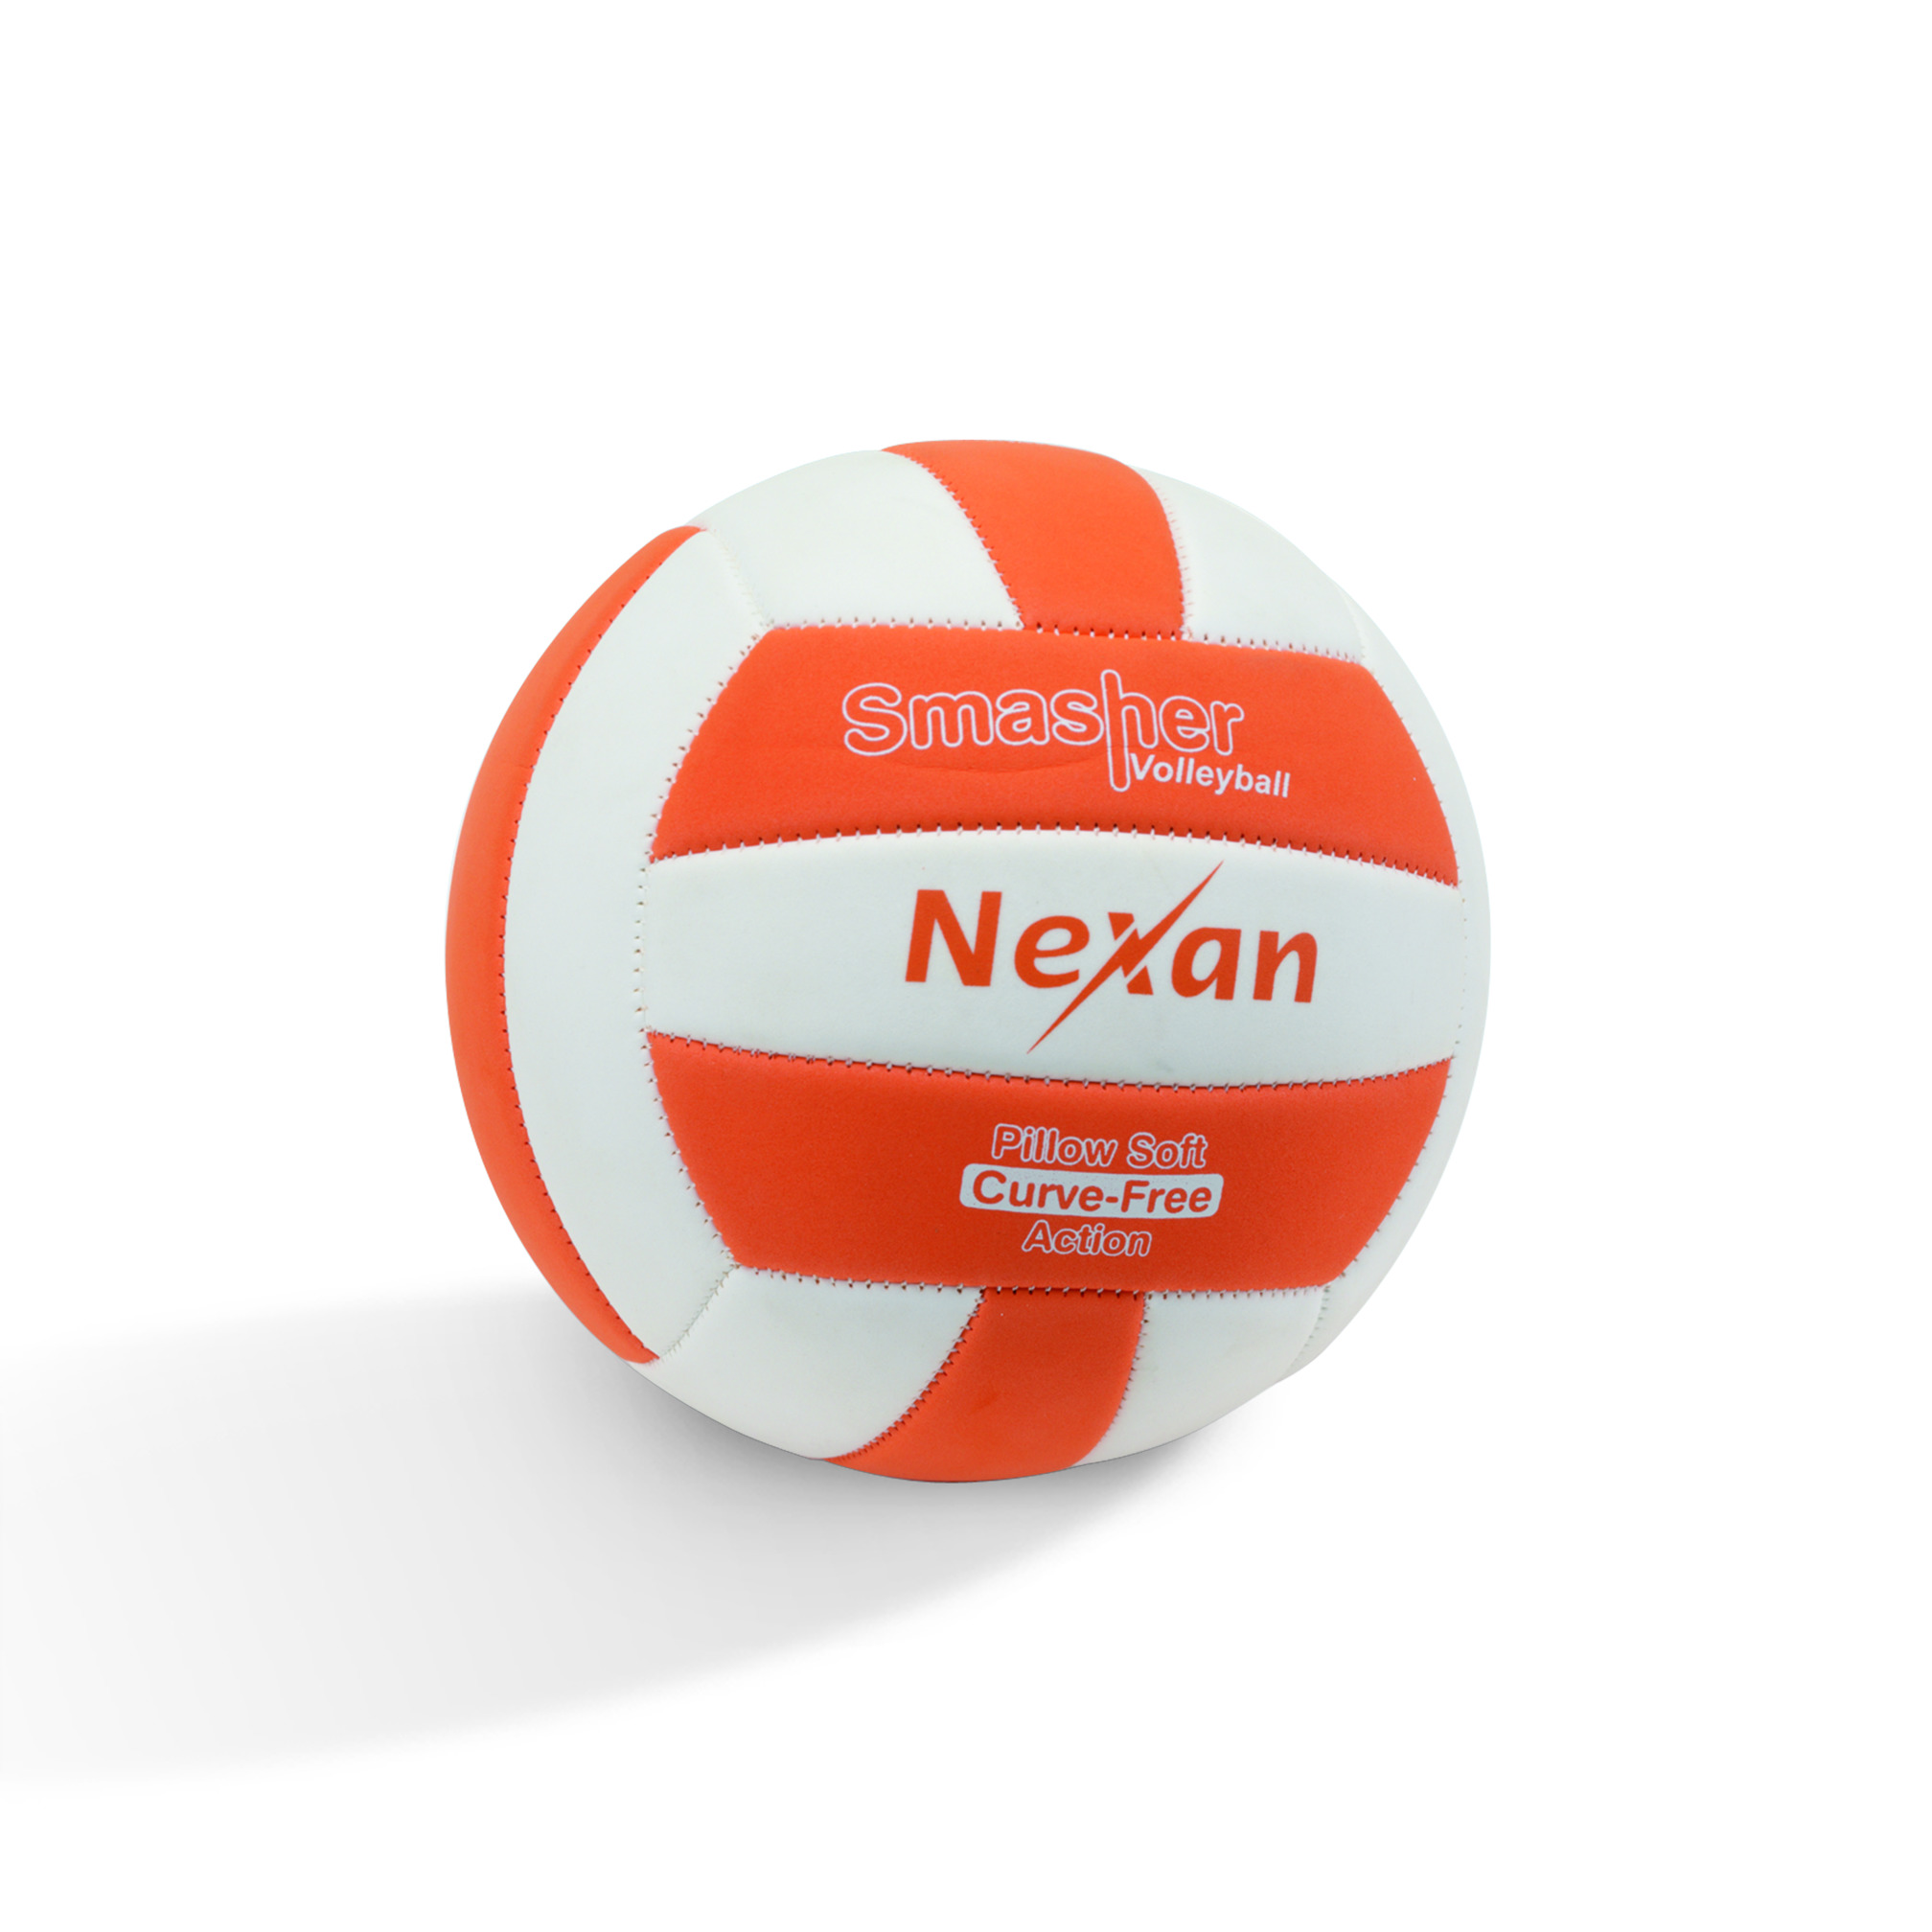 Nexan Volleyball Smasher Pillow Soft, size 5